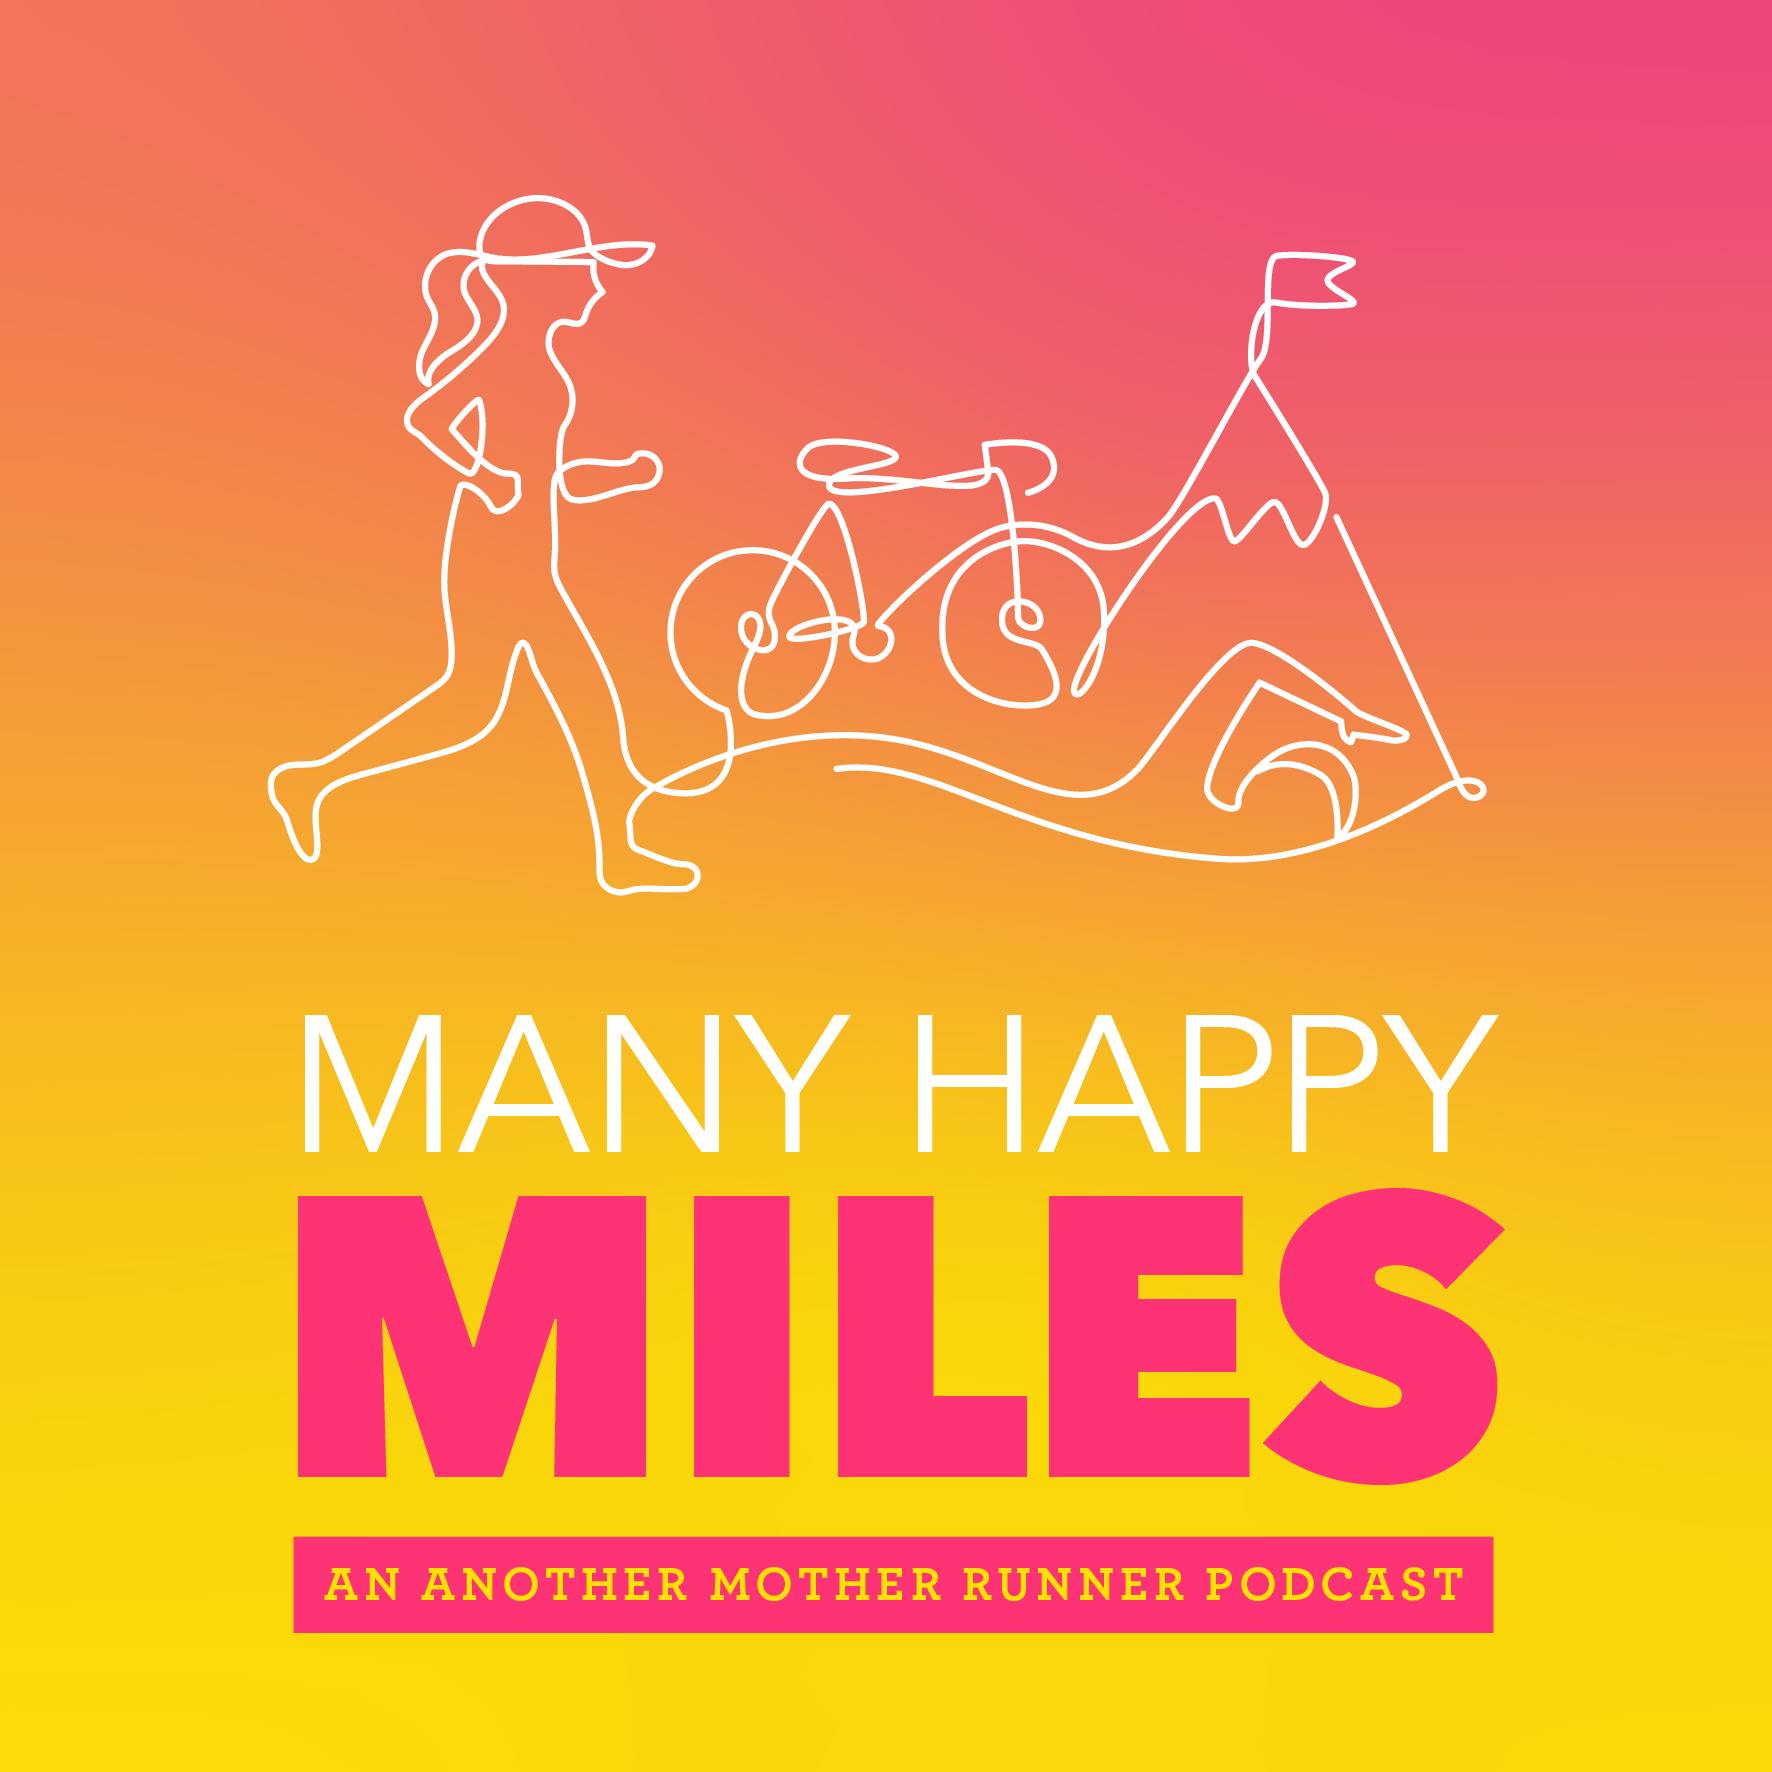 Many Happy Miles: Marathons, Mom Guilt, and the Myth of the Supermom